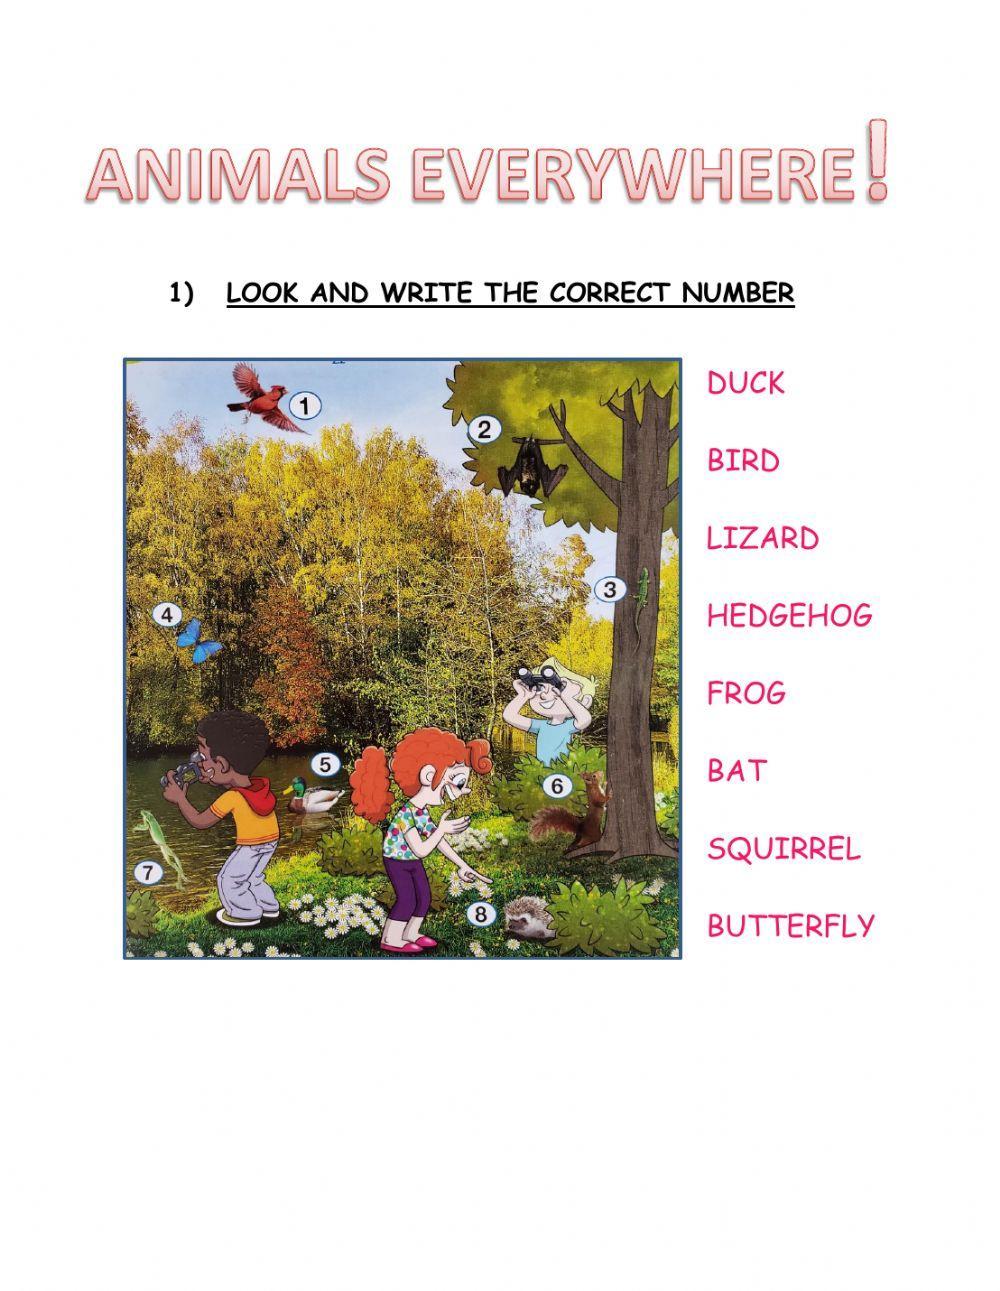 Animals everywhere